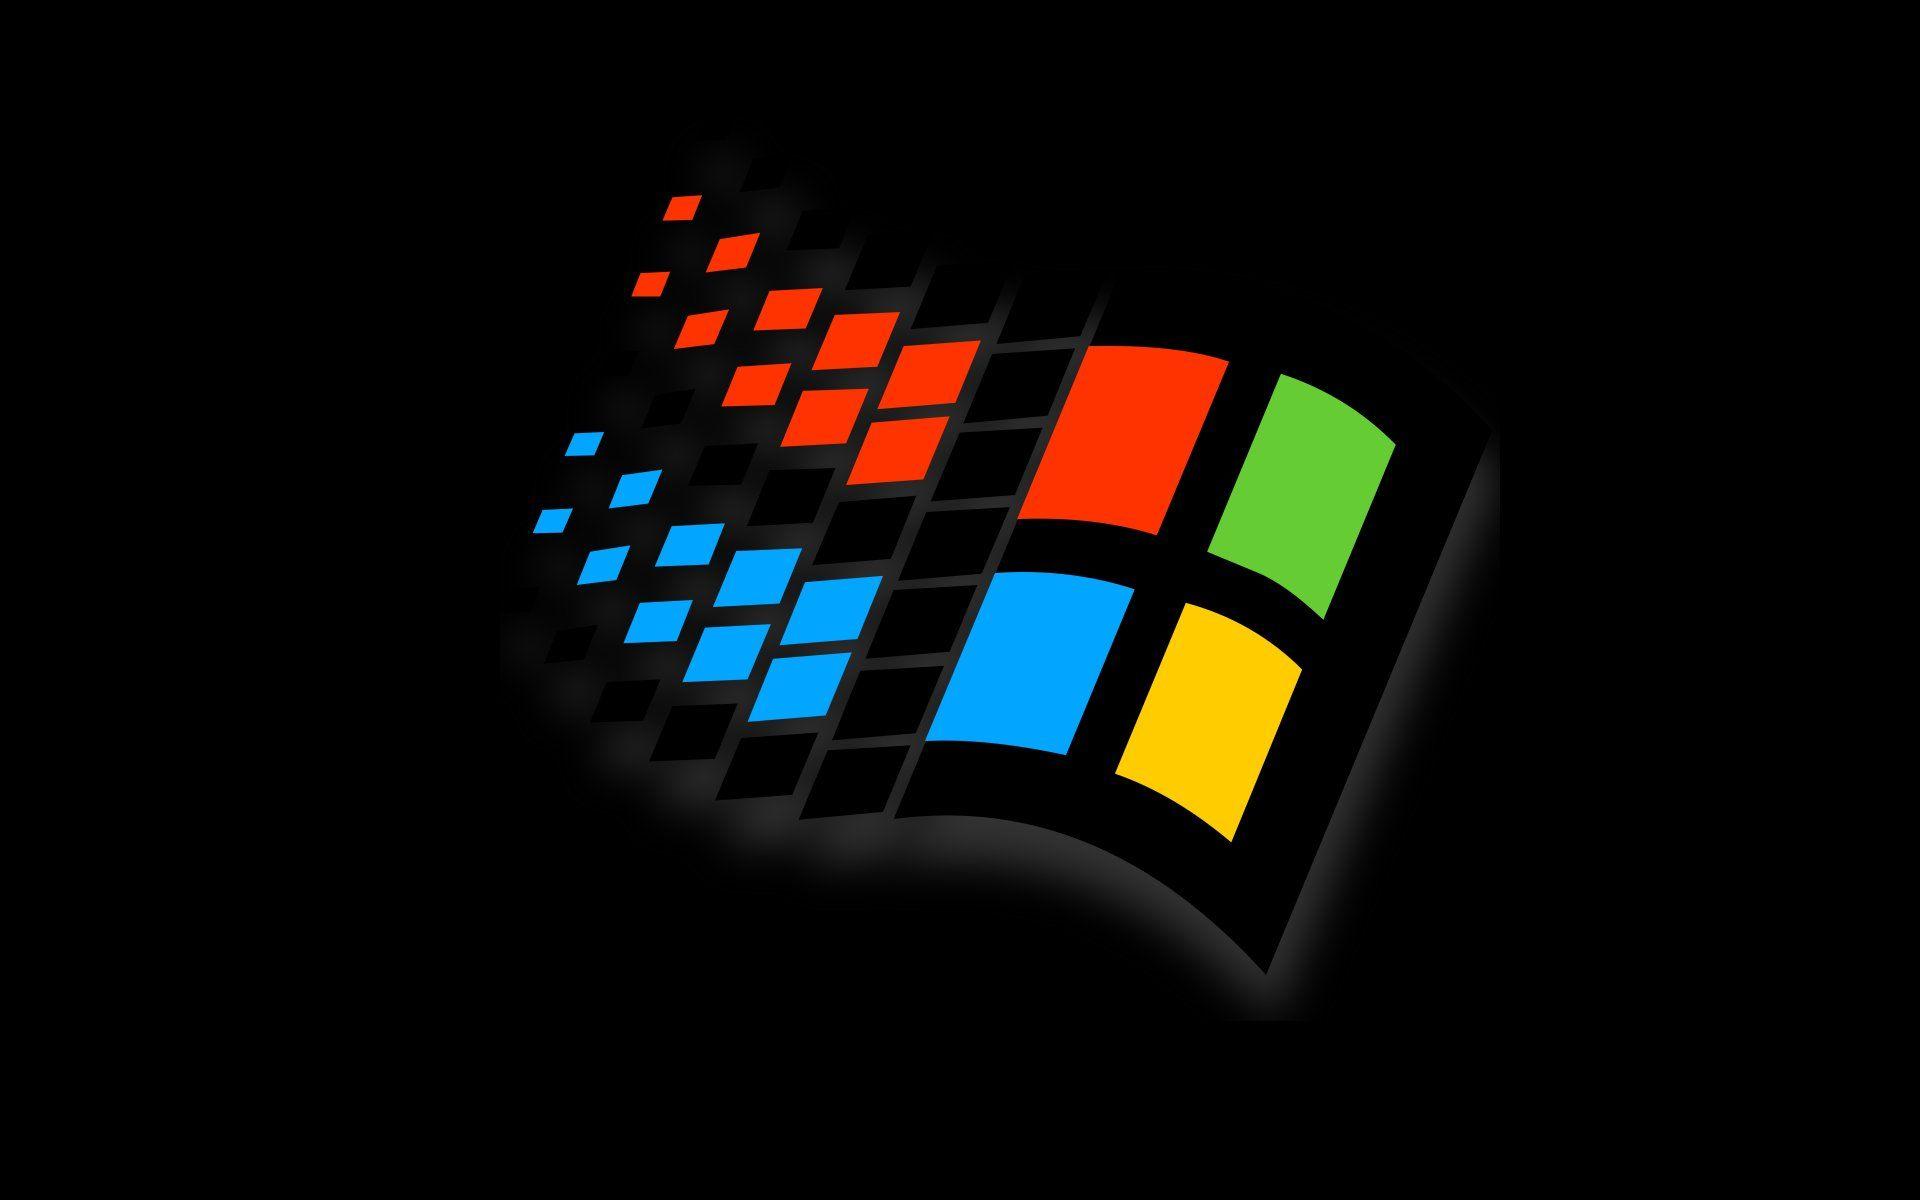 Windows 98 Logos